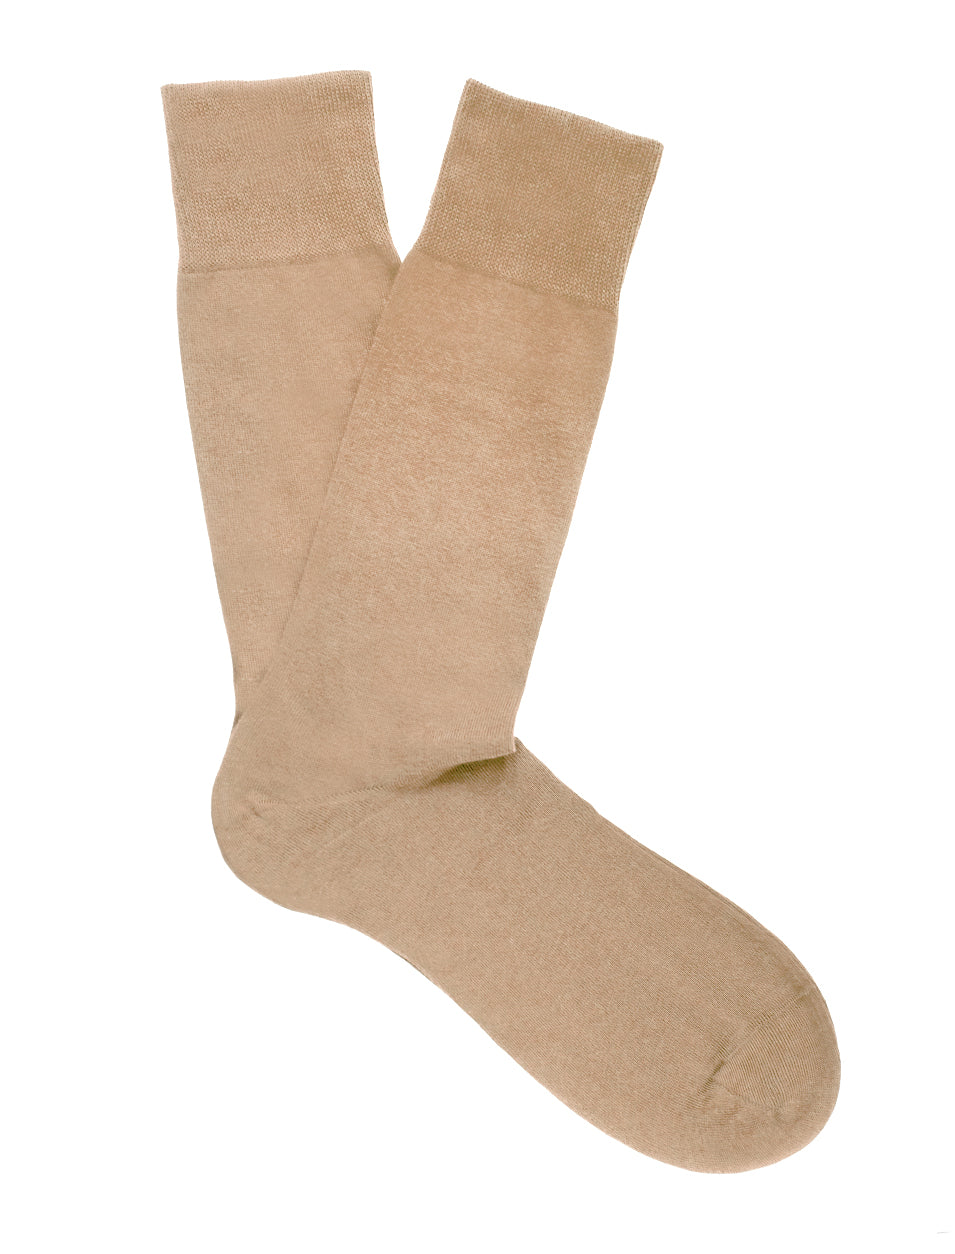 PANTHERELLA Tavener Flat Knit - Comfort Top / Egyptian Cotton Men's Socks in Light Khaki